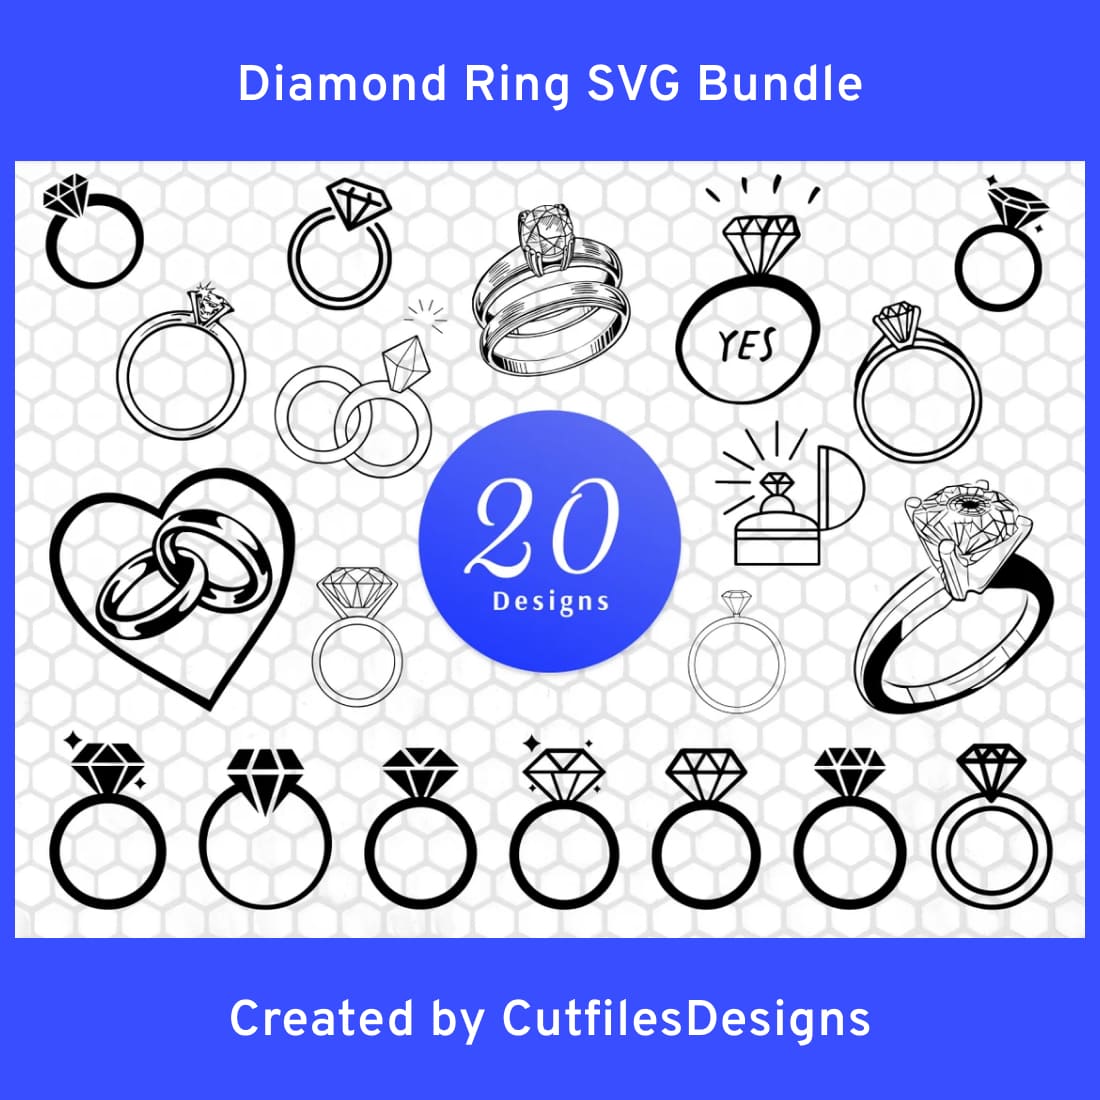 Diamond Ring SVG Bundle main cover.